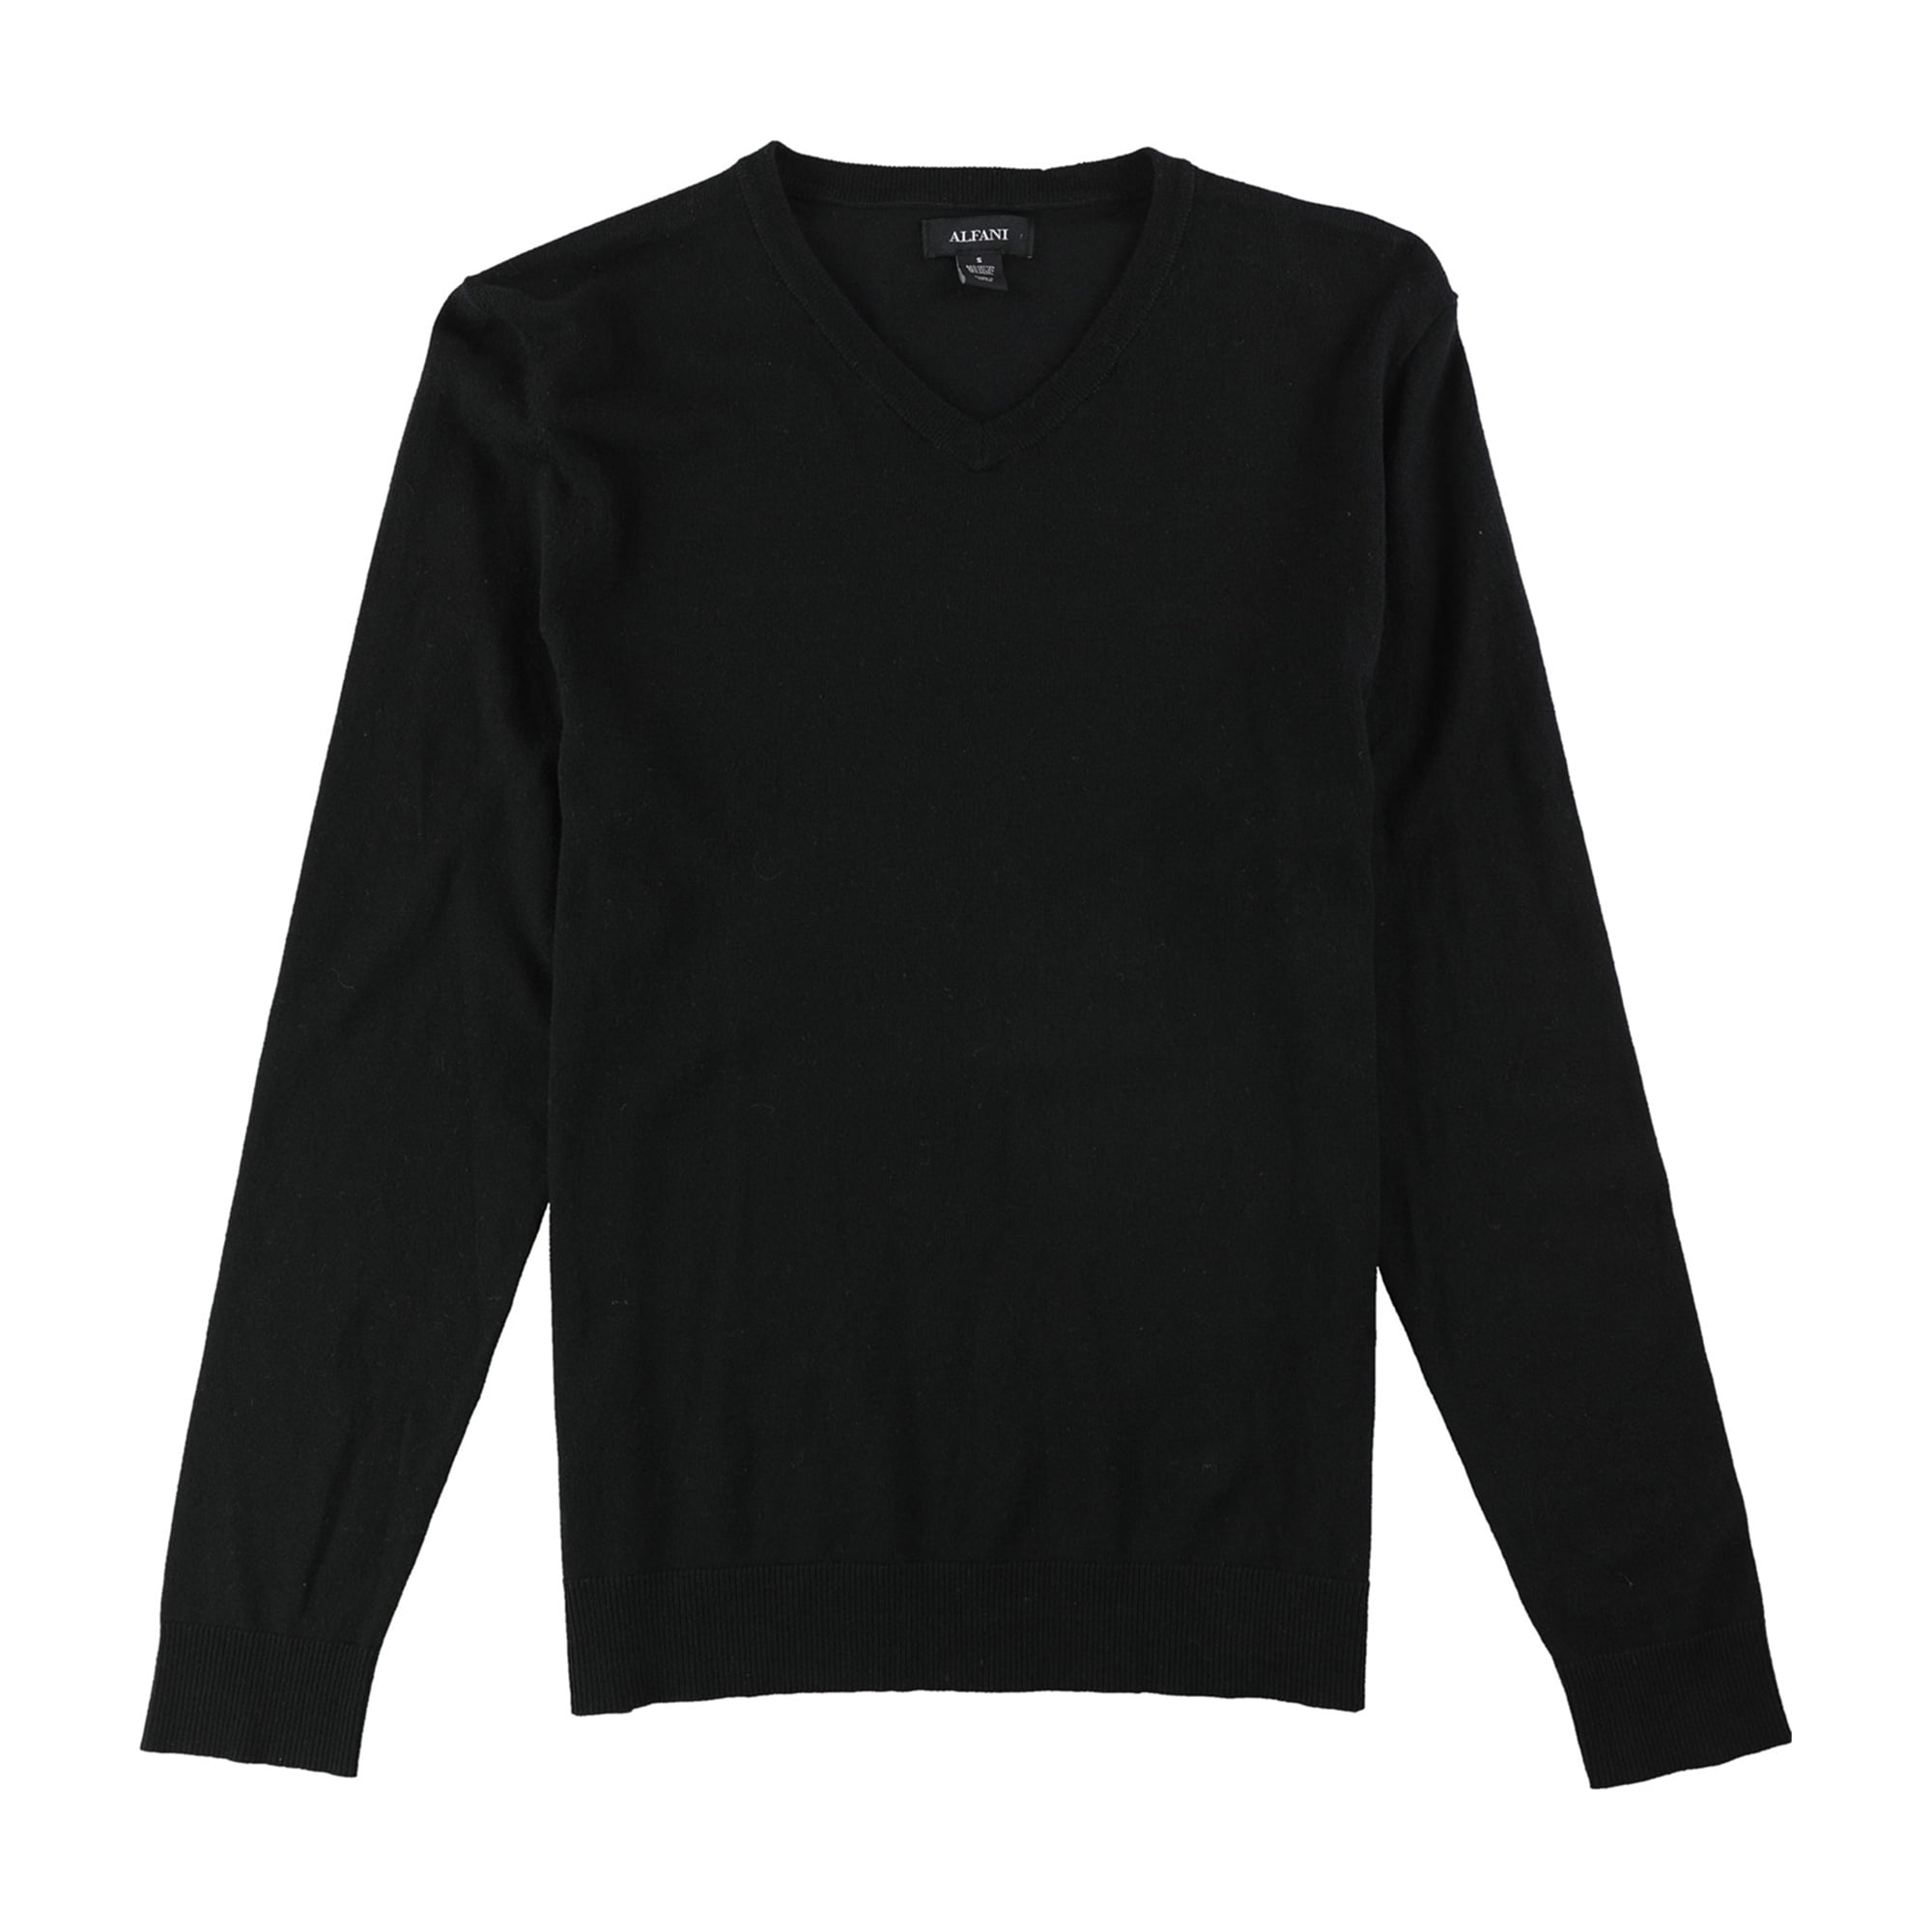 Alfani Mens Knit Pullover Sweater, Black, Medium - Walmart.com